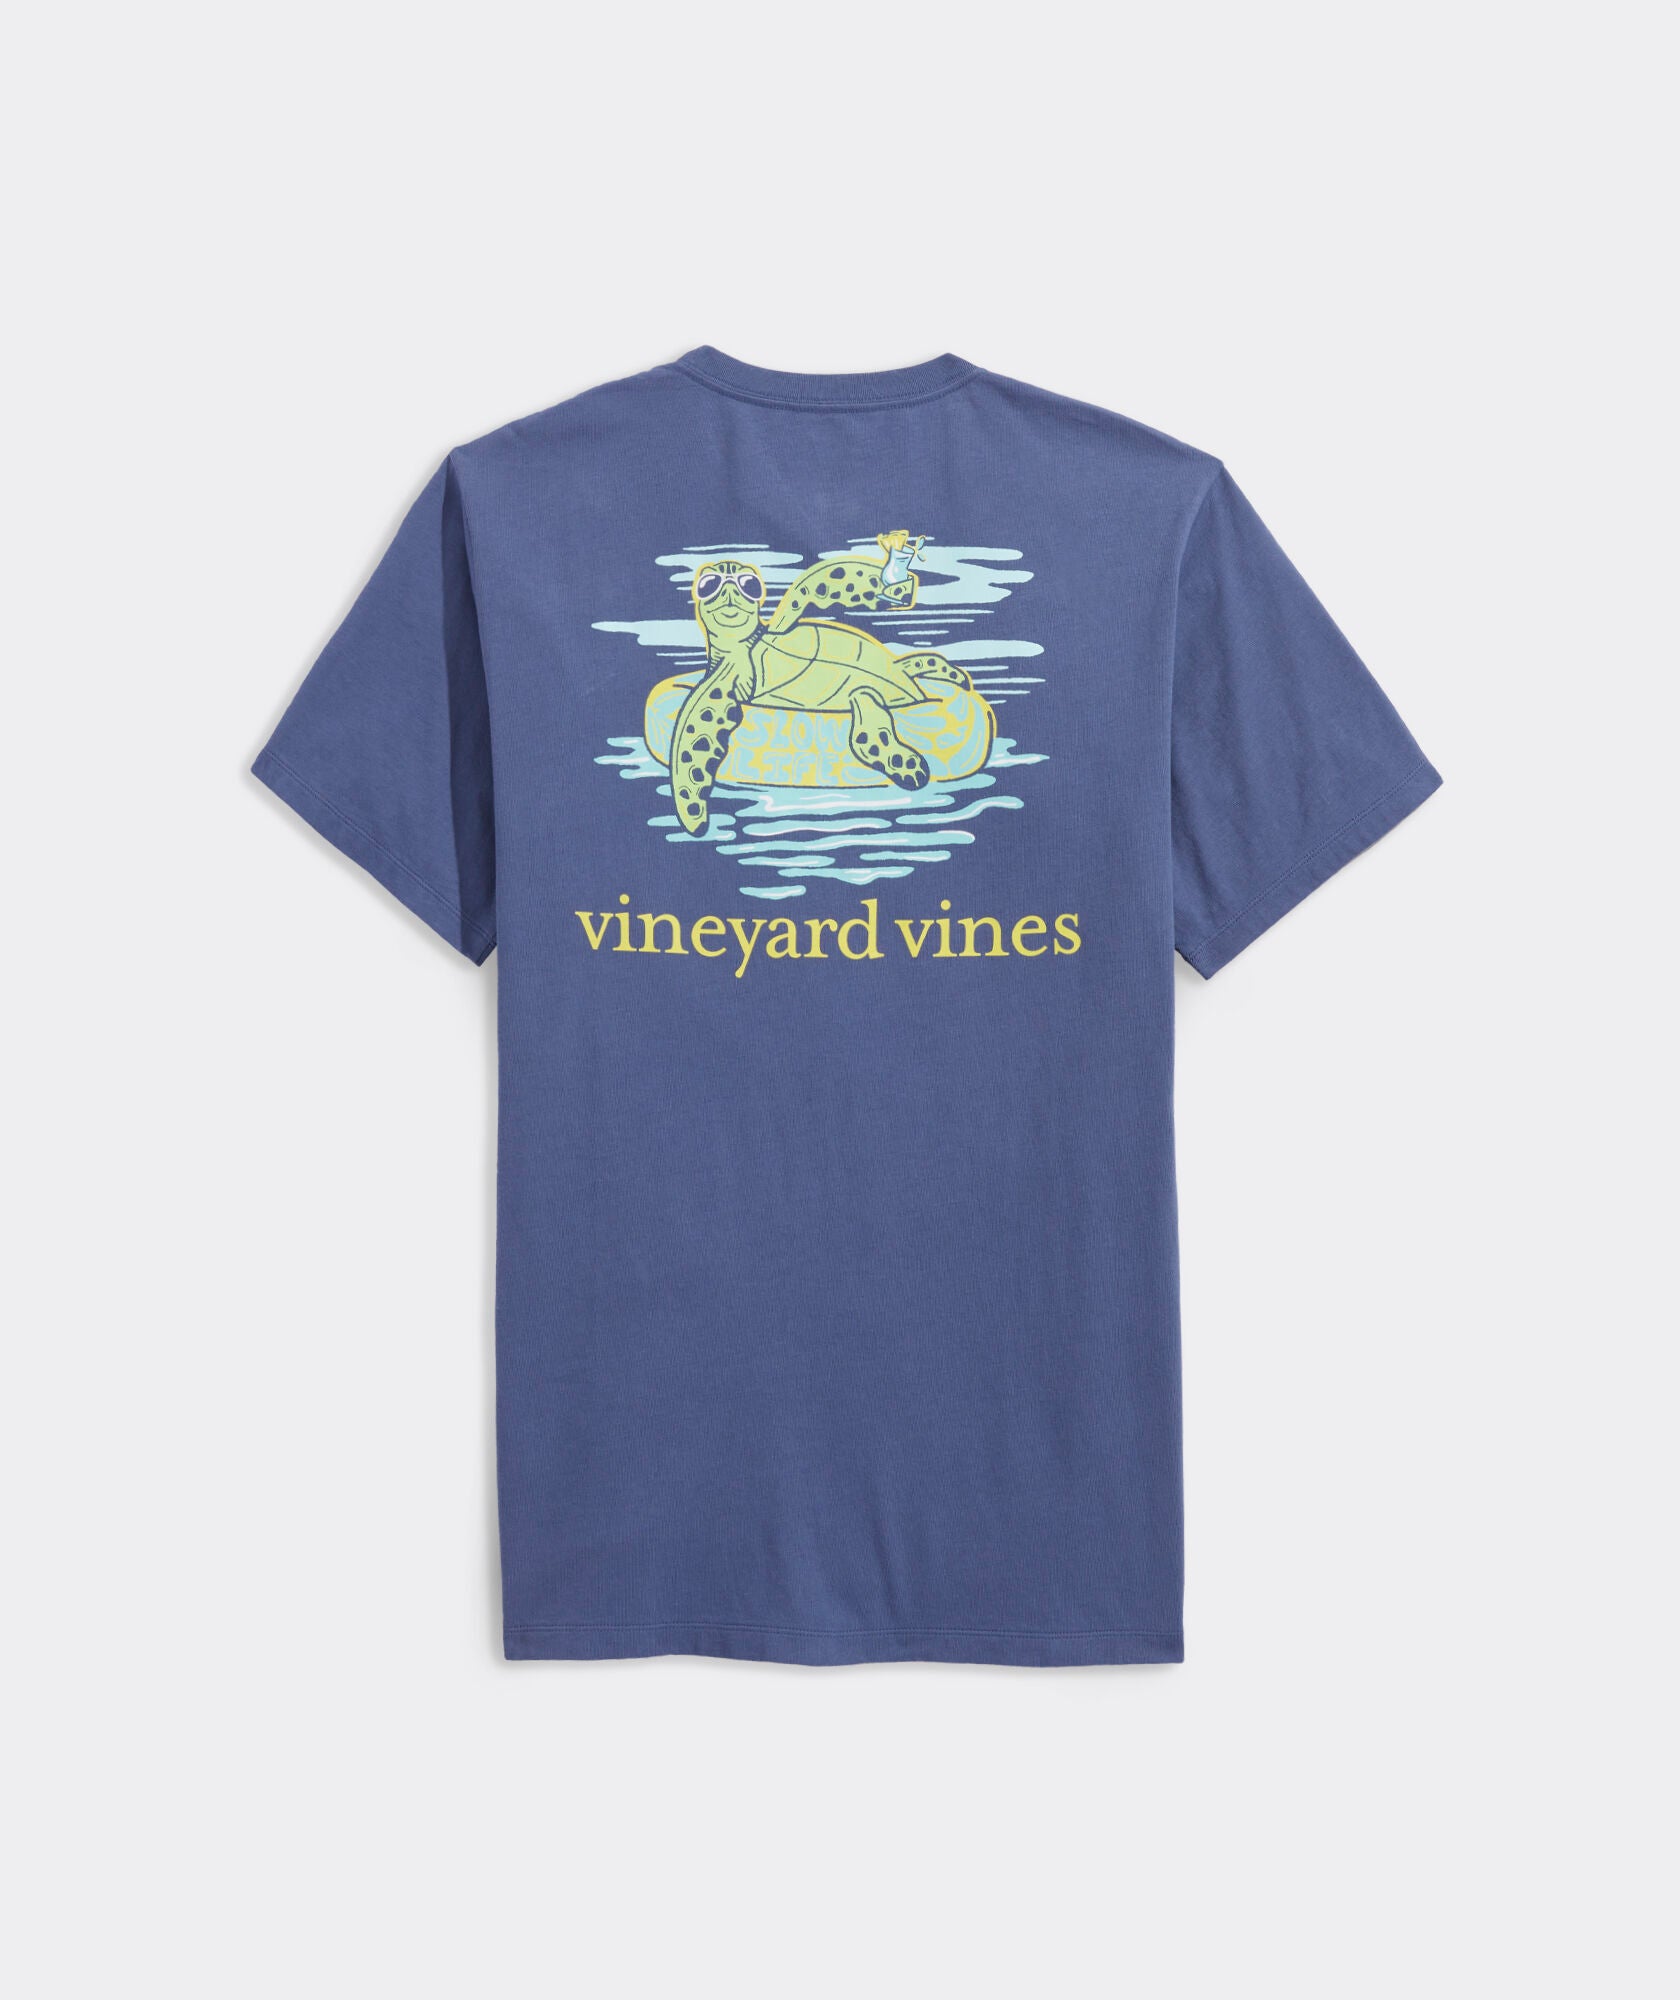 Full back view of a Vineyard Vines Men's Lazy River Turtle Short Sleeve Pocket Tee.